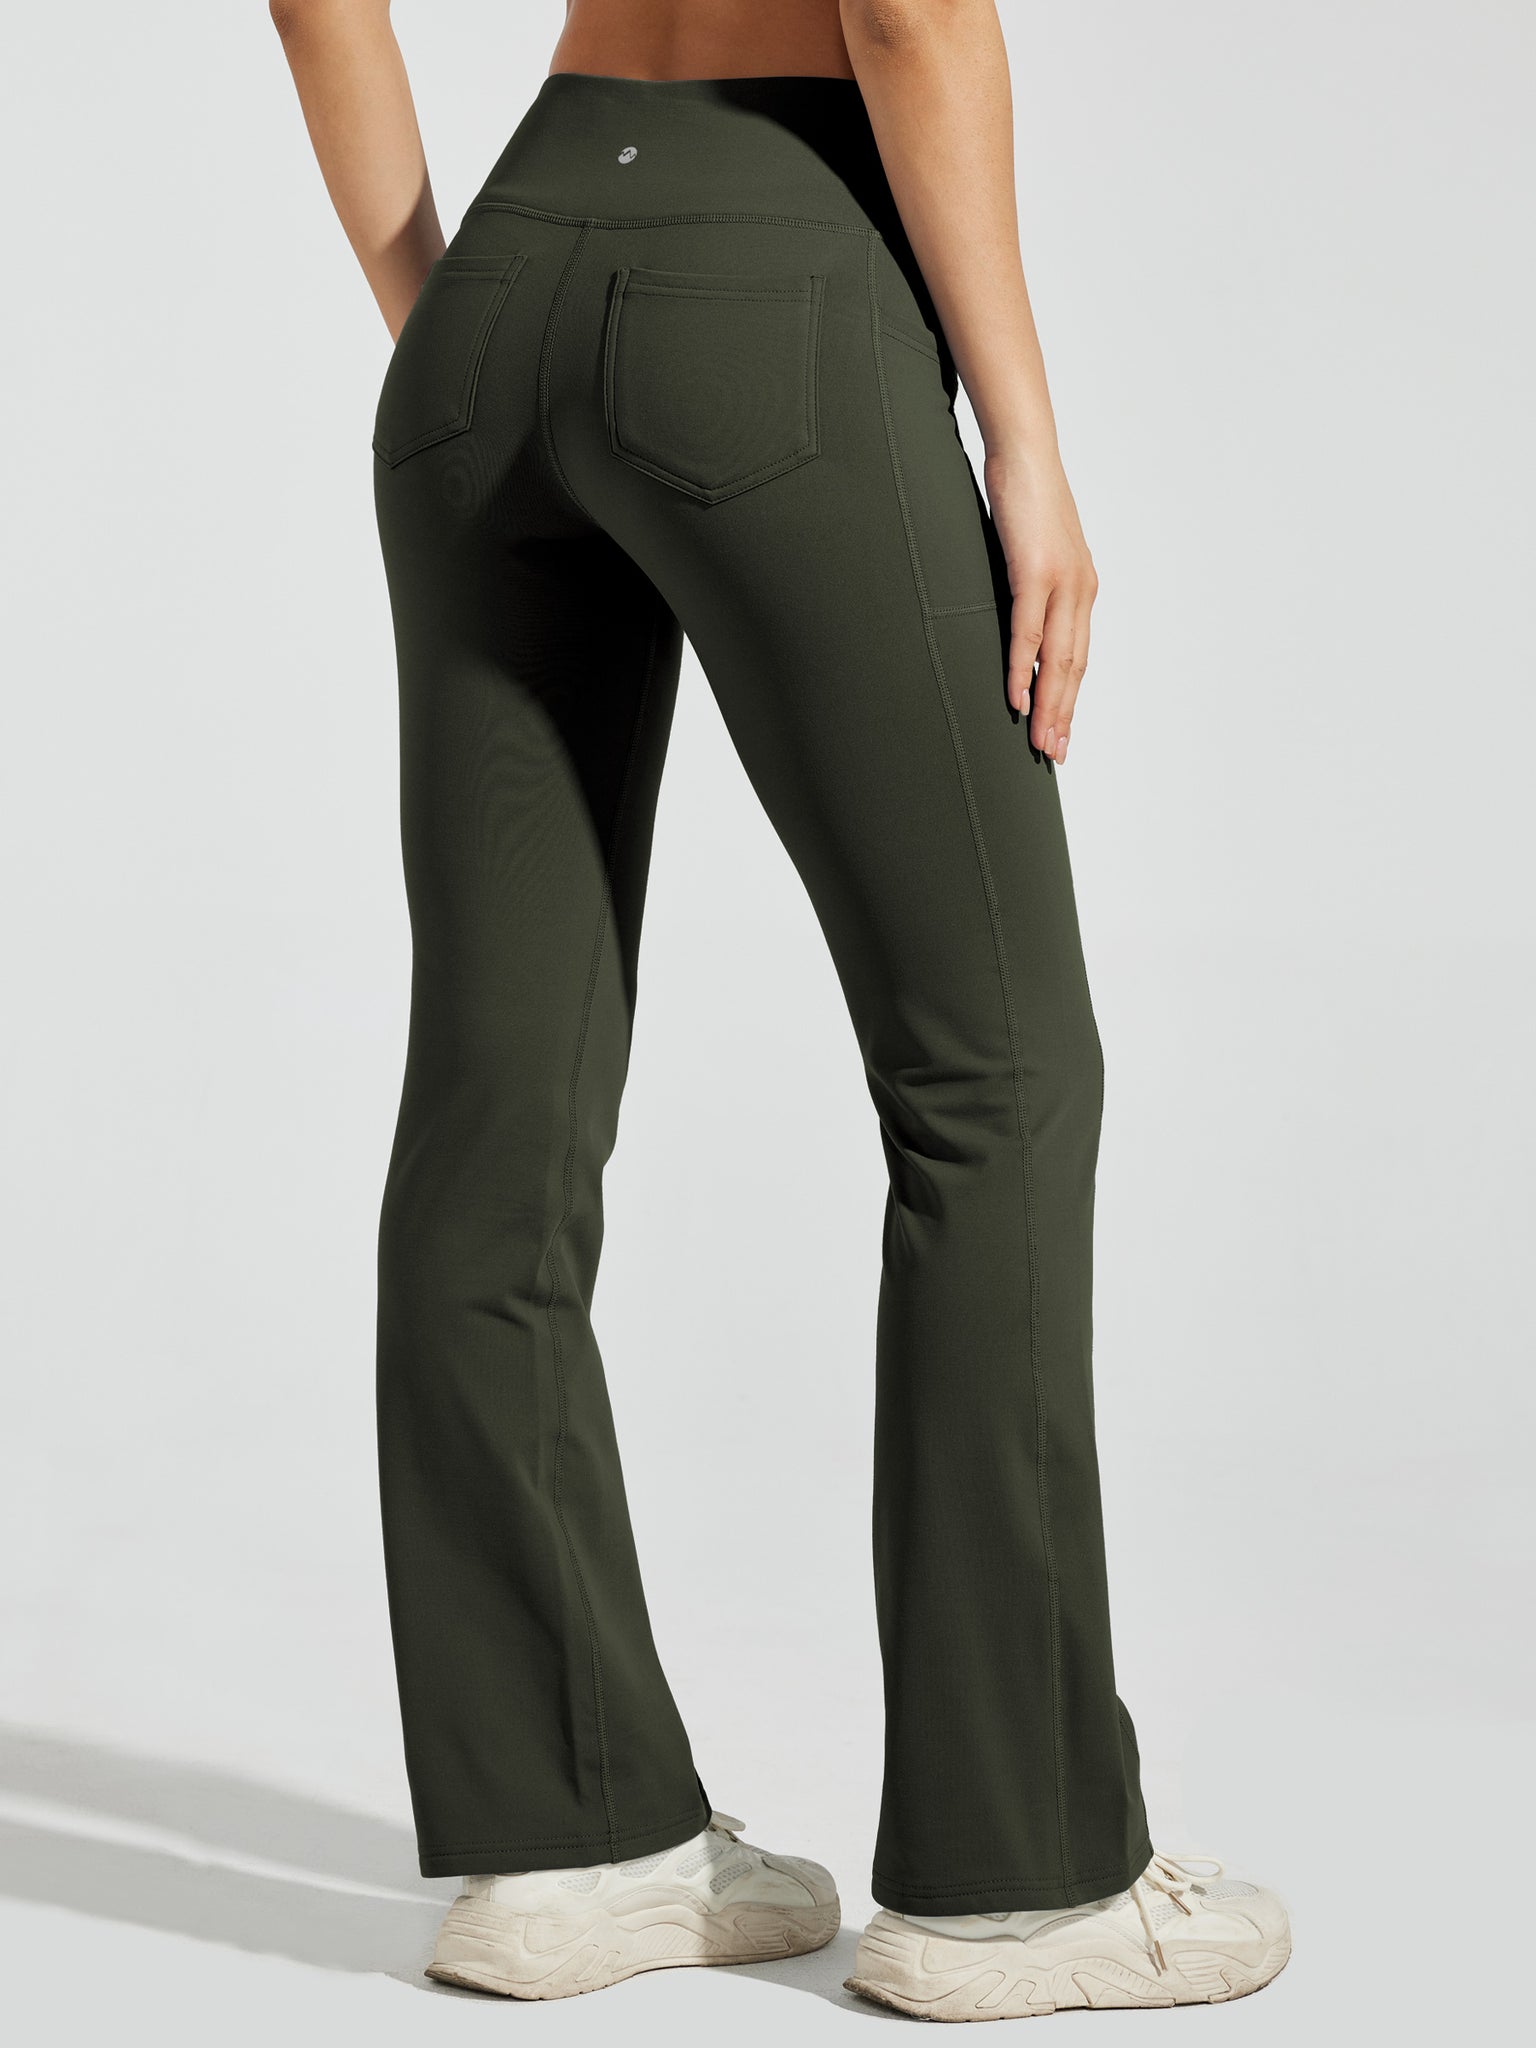 Women's Fleece Lined Bootcut Yoga Pants_Olive_model1